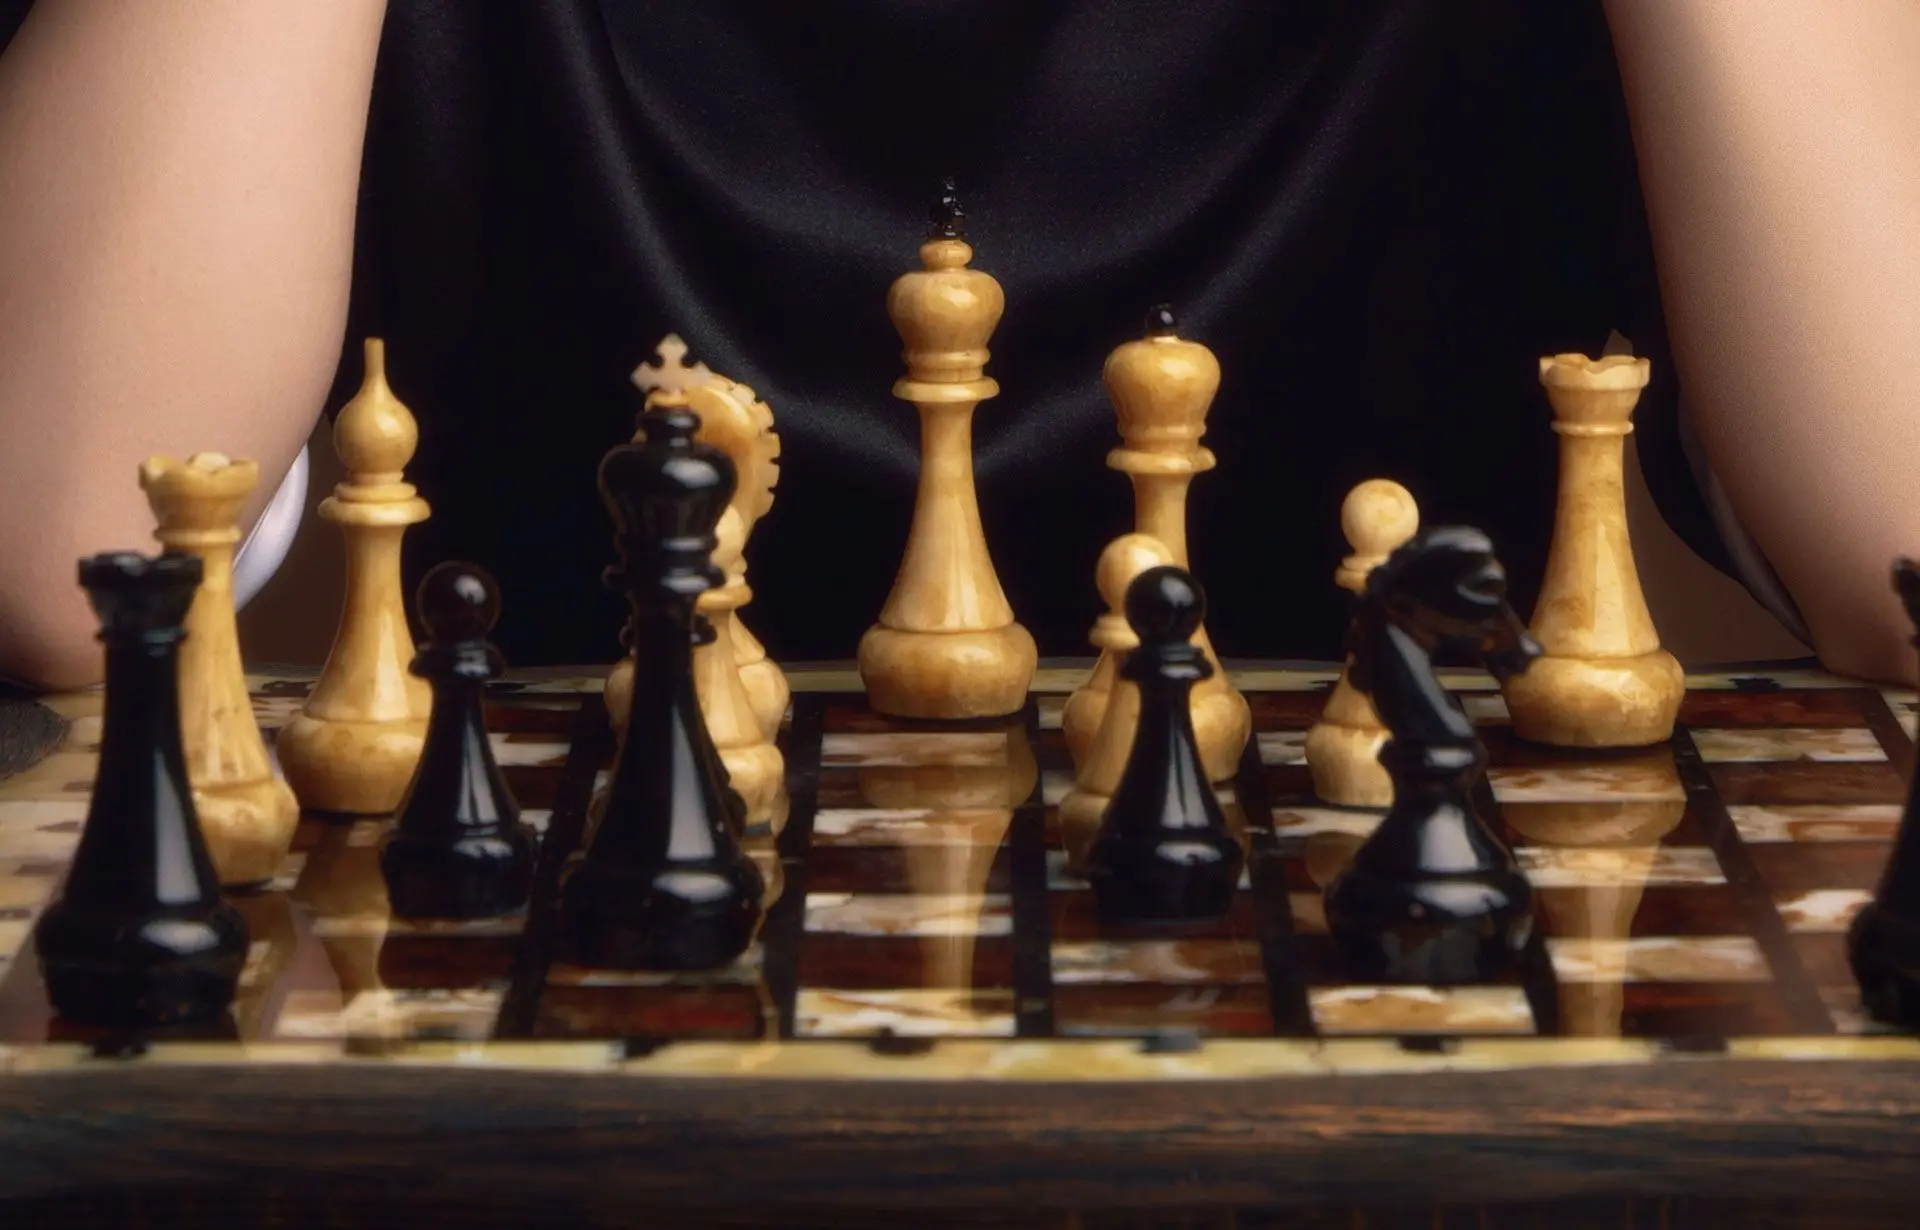 шахматы из фильма ход королевы, фильм про шахматистку